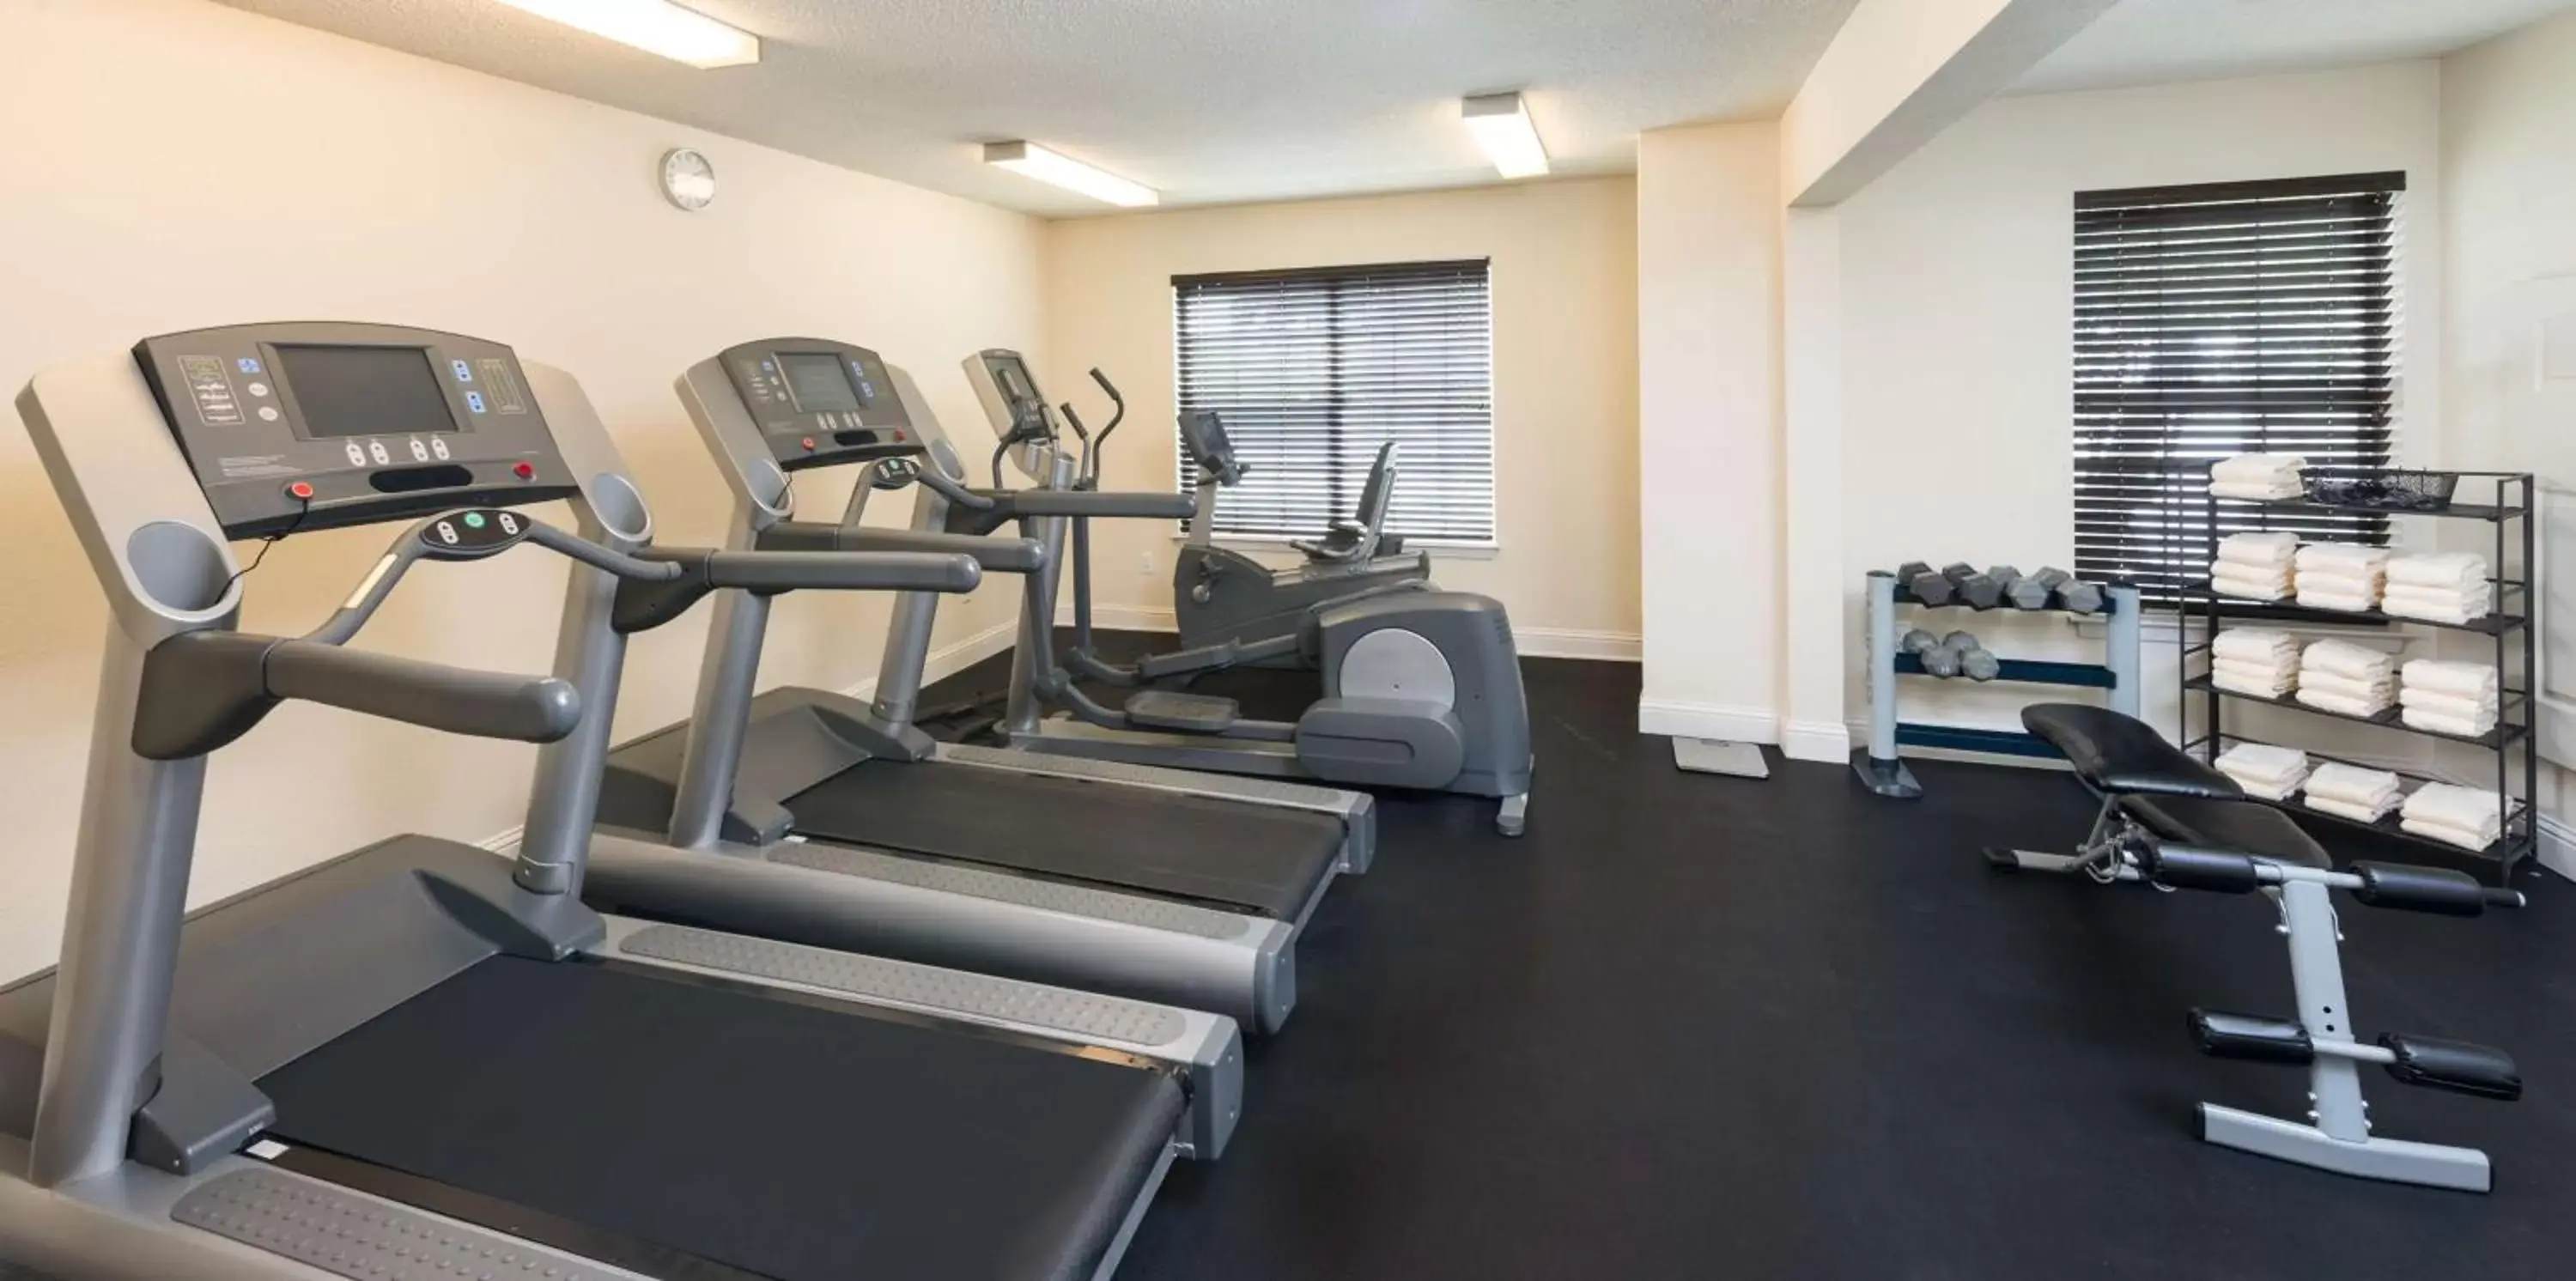 Fitness centre/facilities, Fitness Center/Facilities in Hyatt House Houston/Energy Corridor